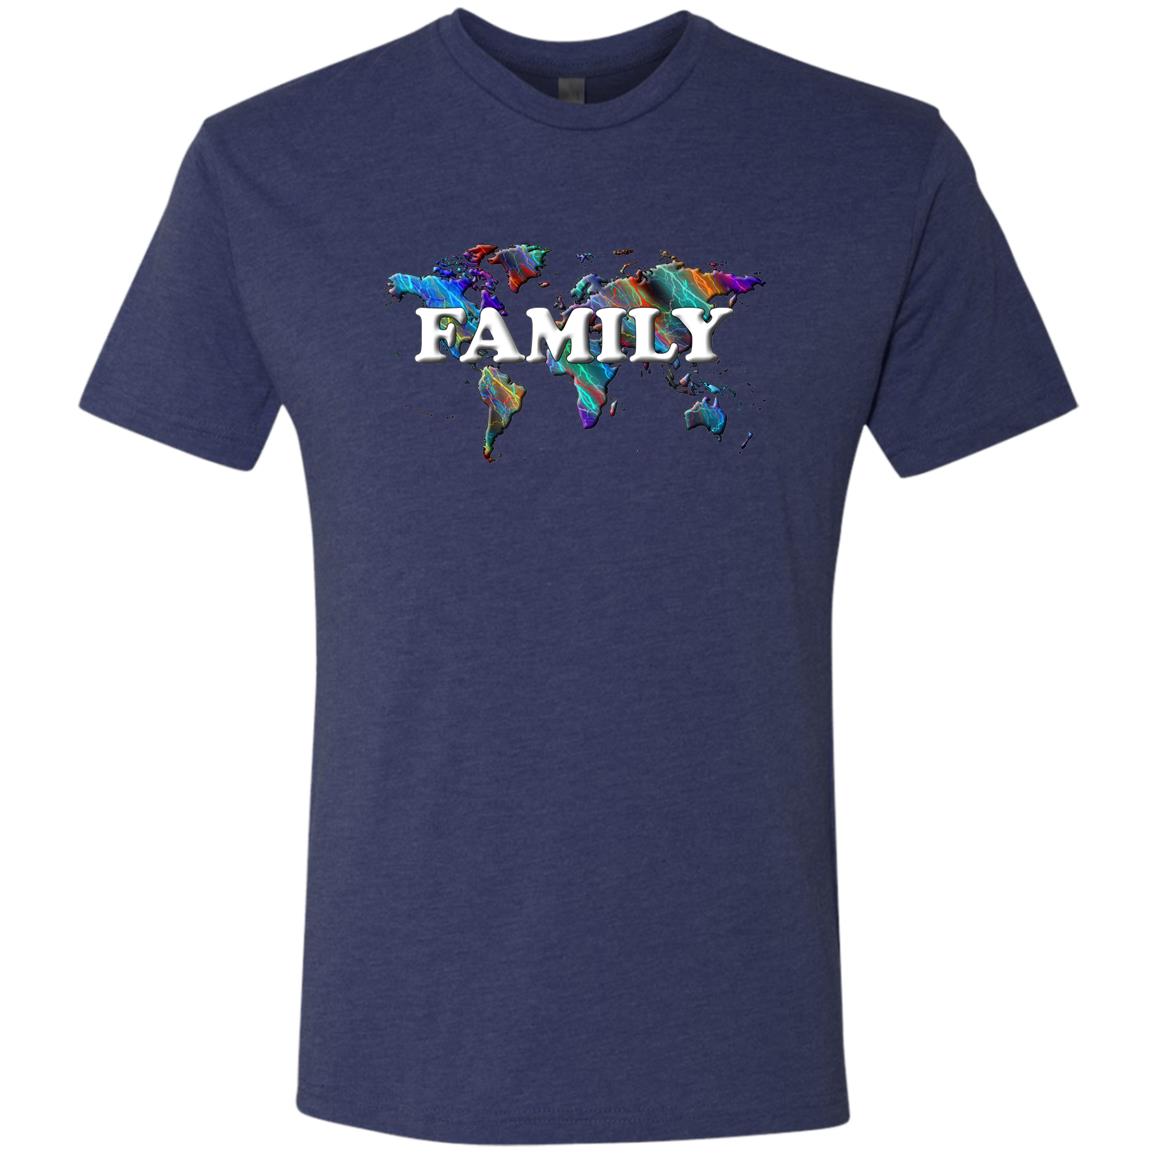 Family Statement T-Shirt